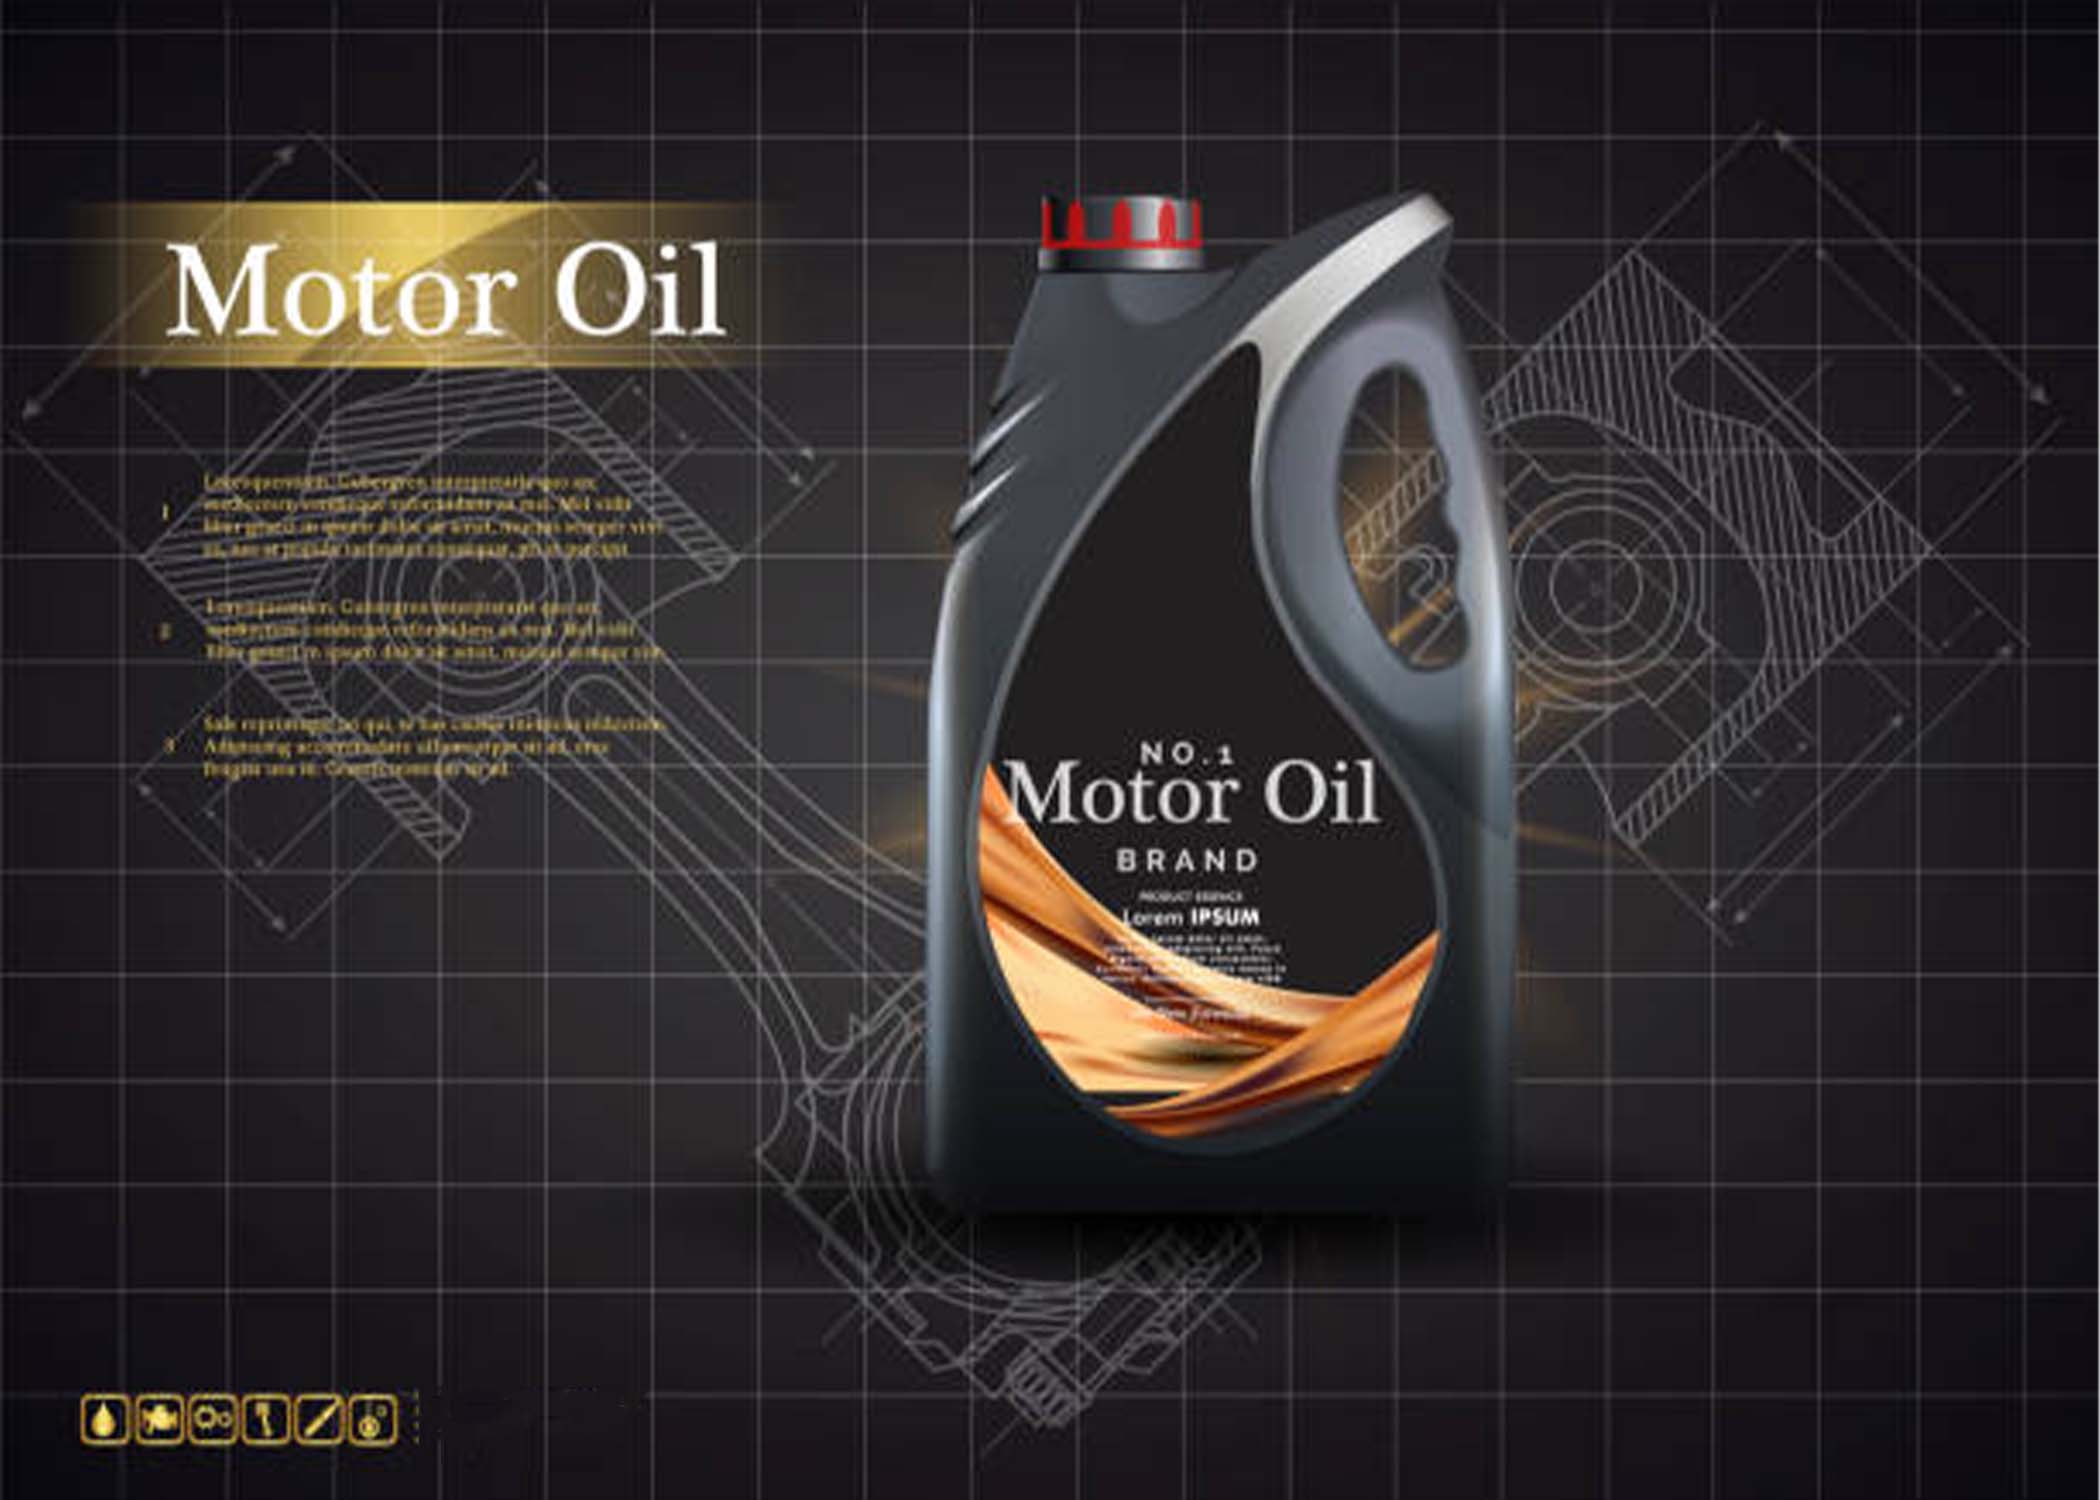 A good quality engine oil always enhances your car's performance